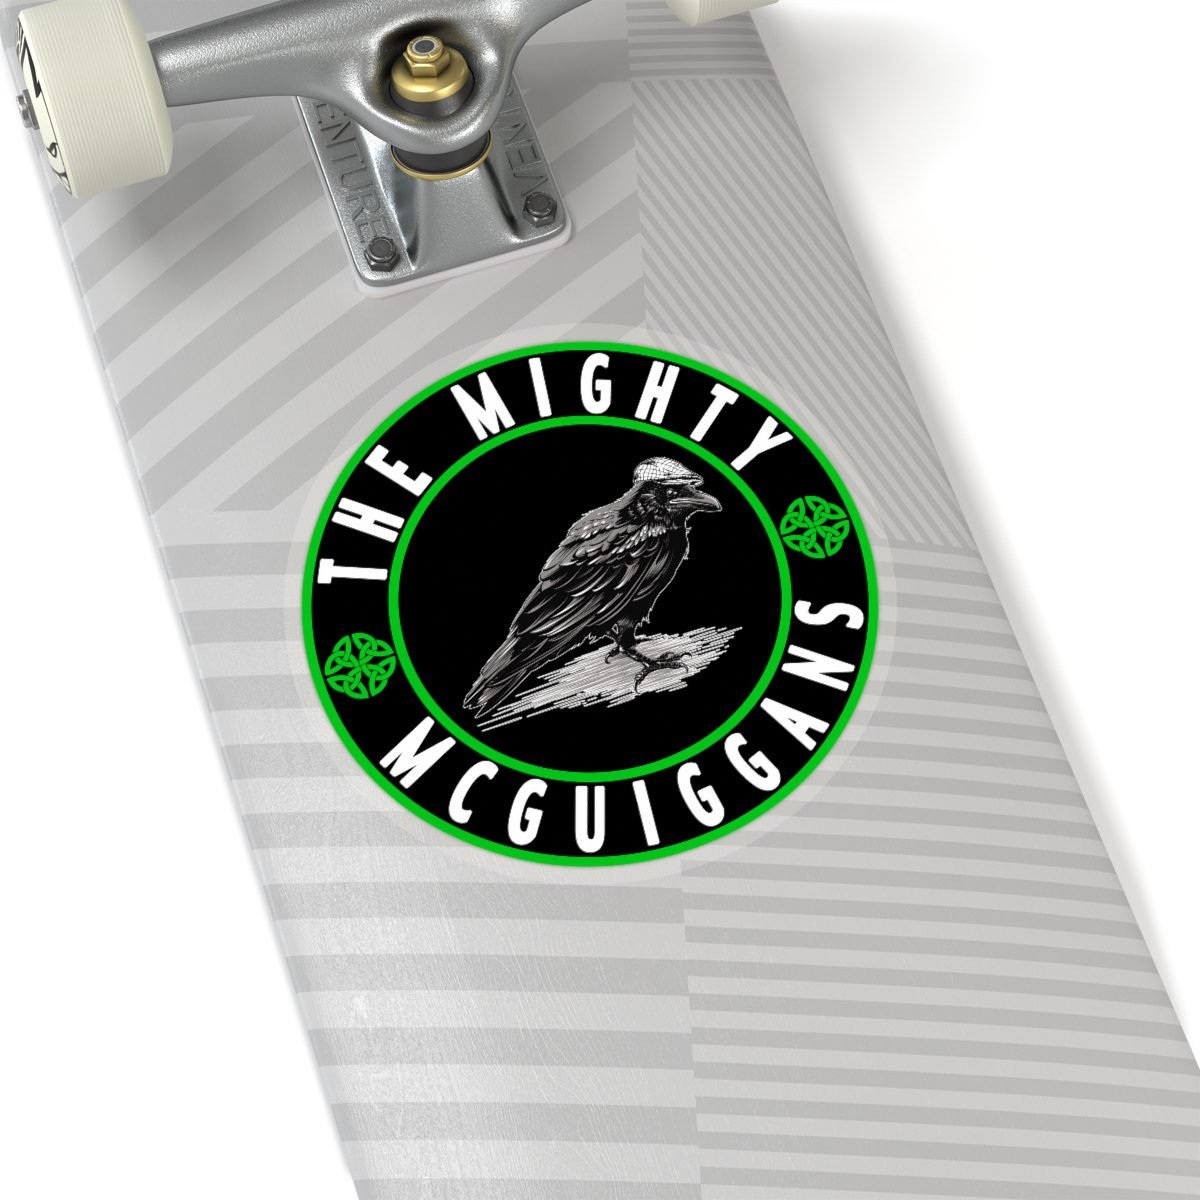 The Mighty McGuiggans GW Logo Die Cut Stickers